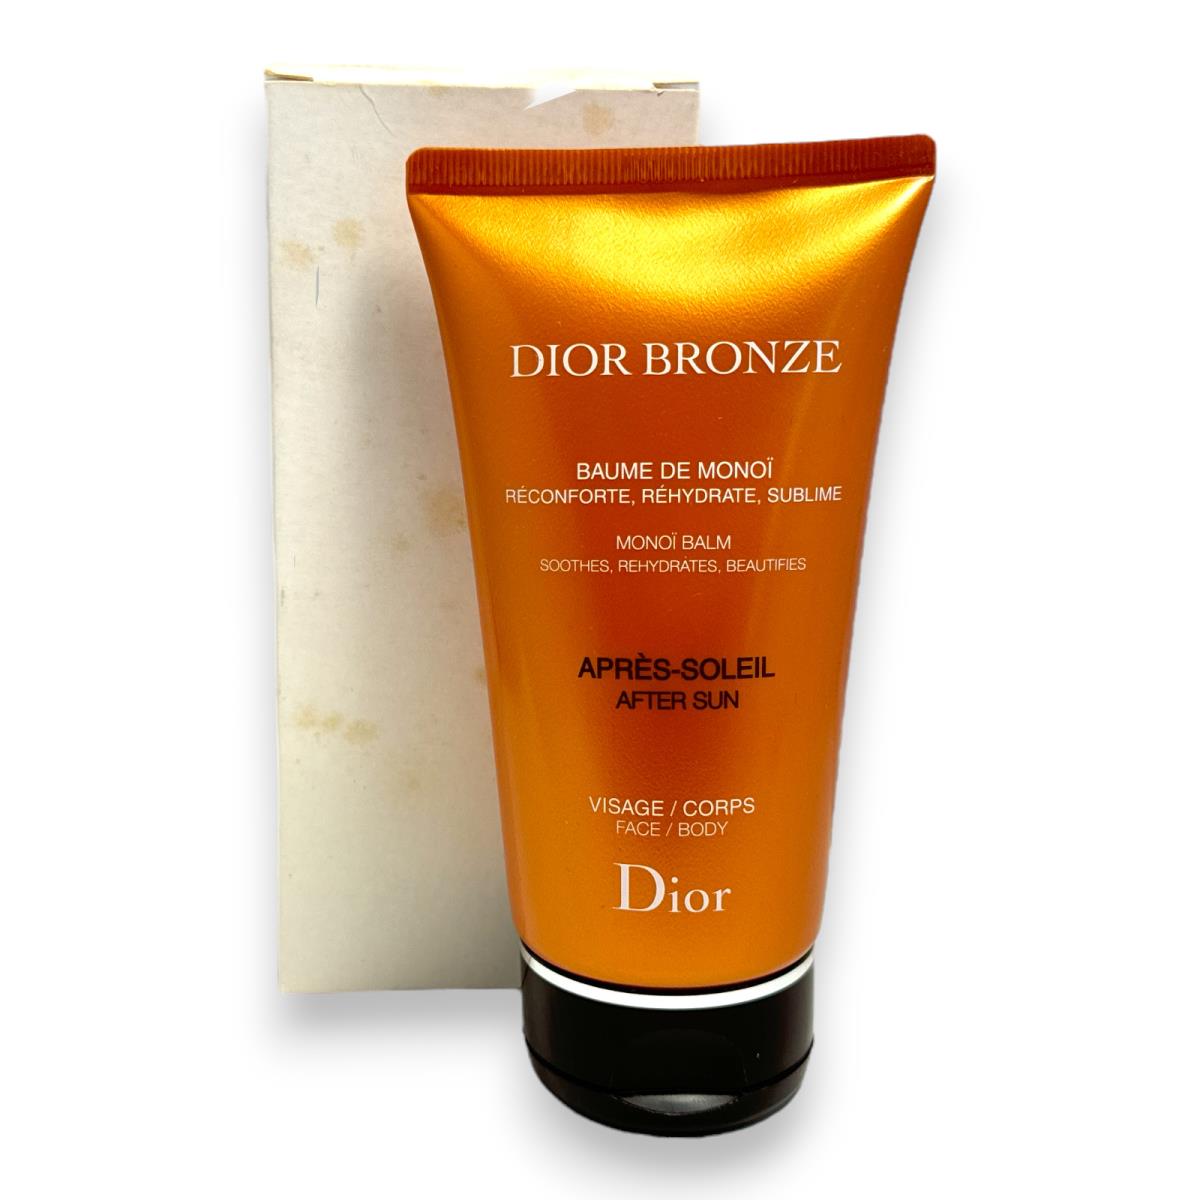 Dior Bronze Monoi Balm Soothes Rehydrates Beautifies After Sun 150ml/5.2fl.oz